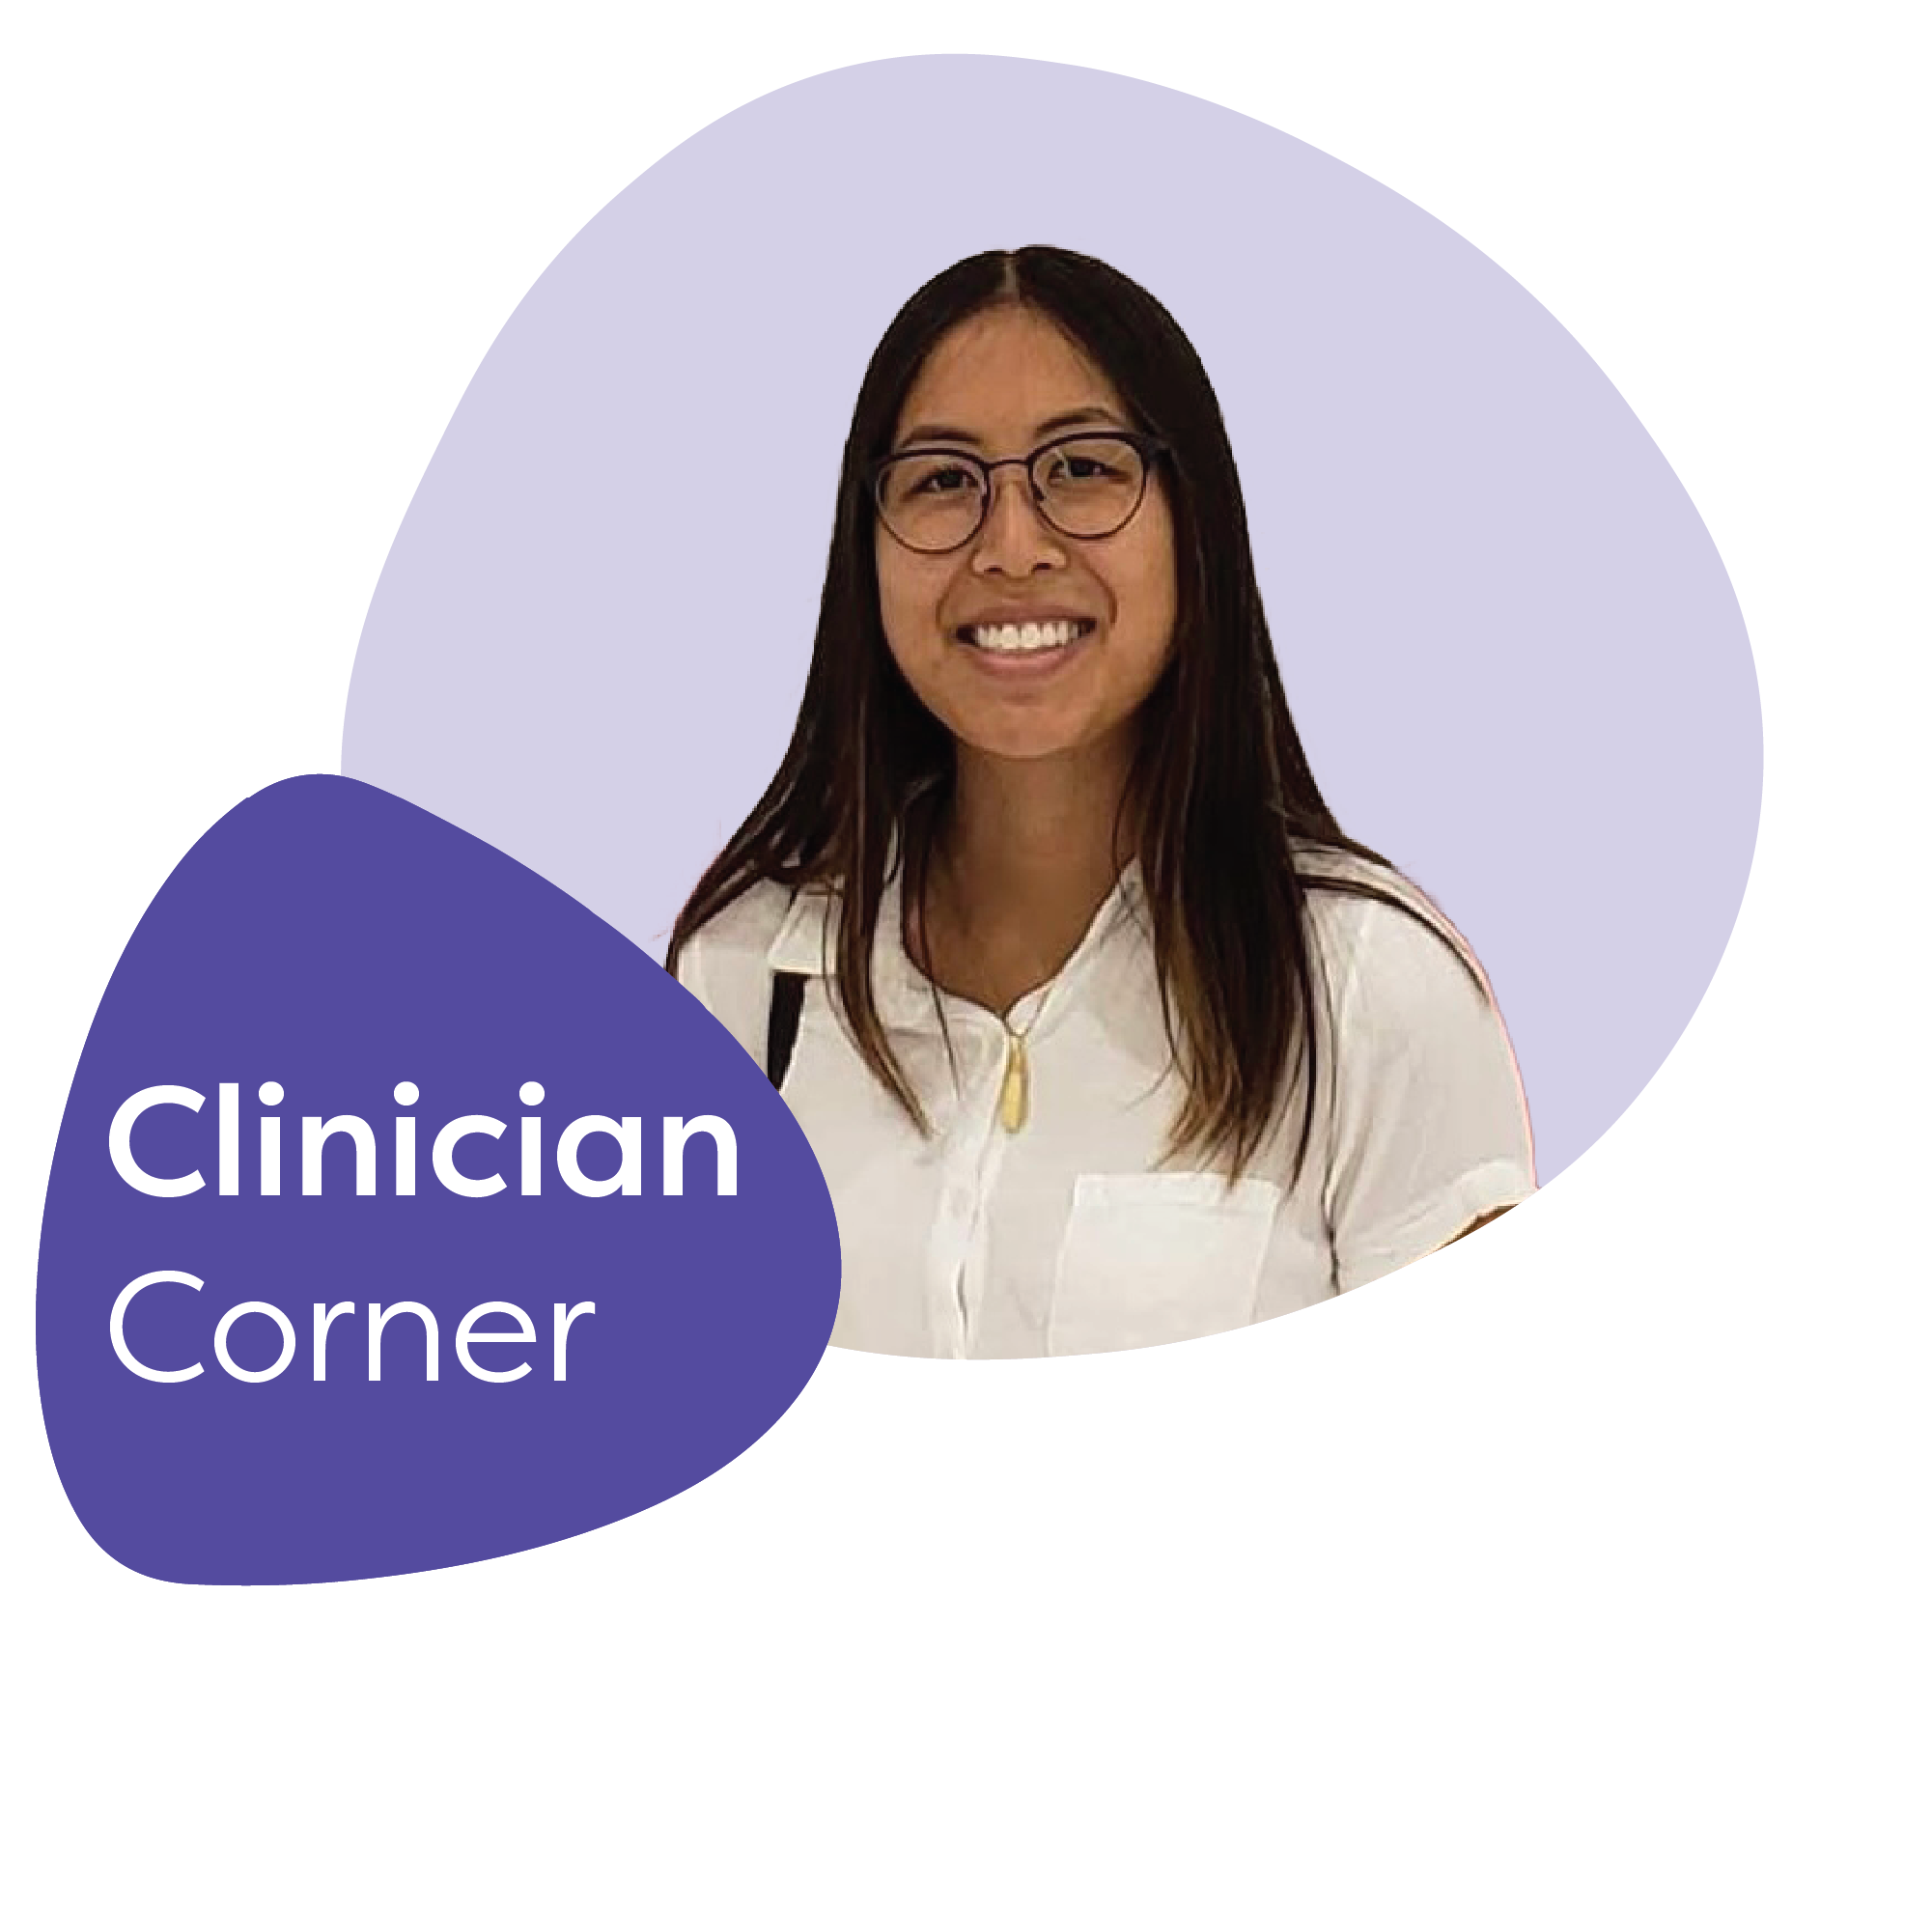 Clinician Corner: Meet Veronica Im, LCSW